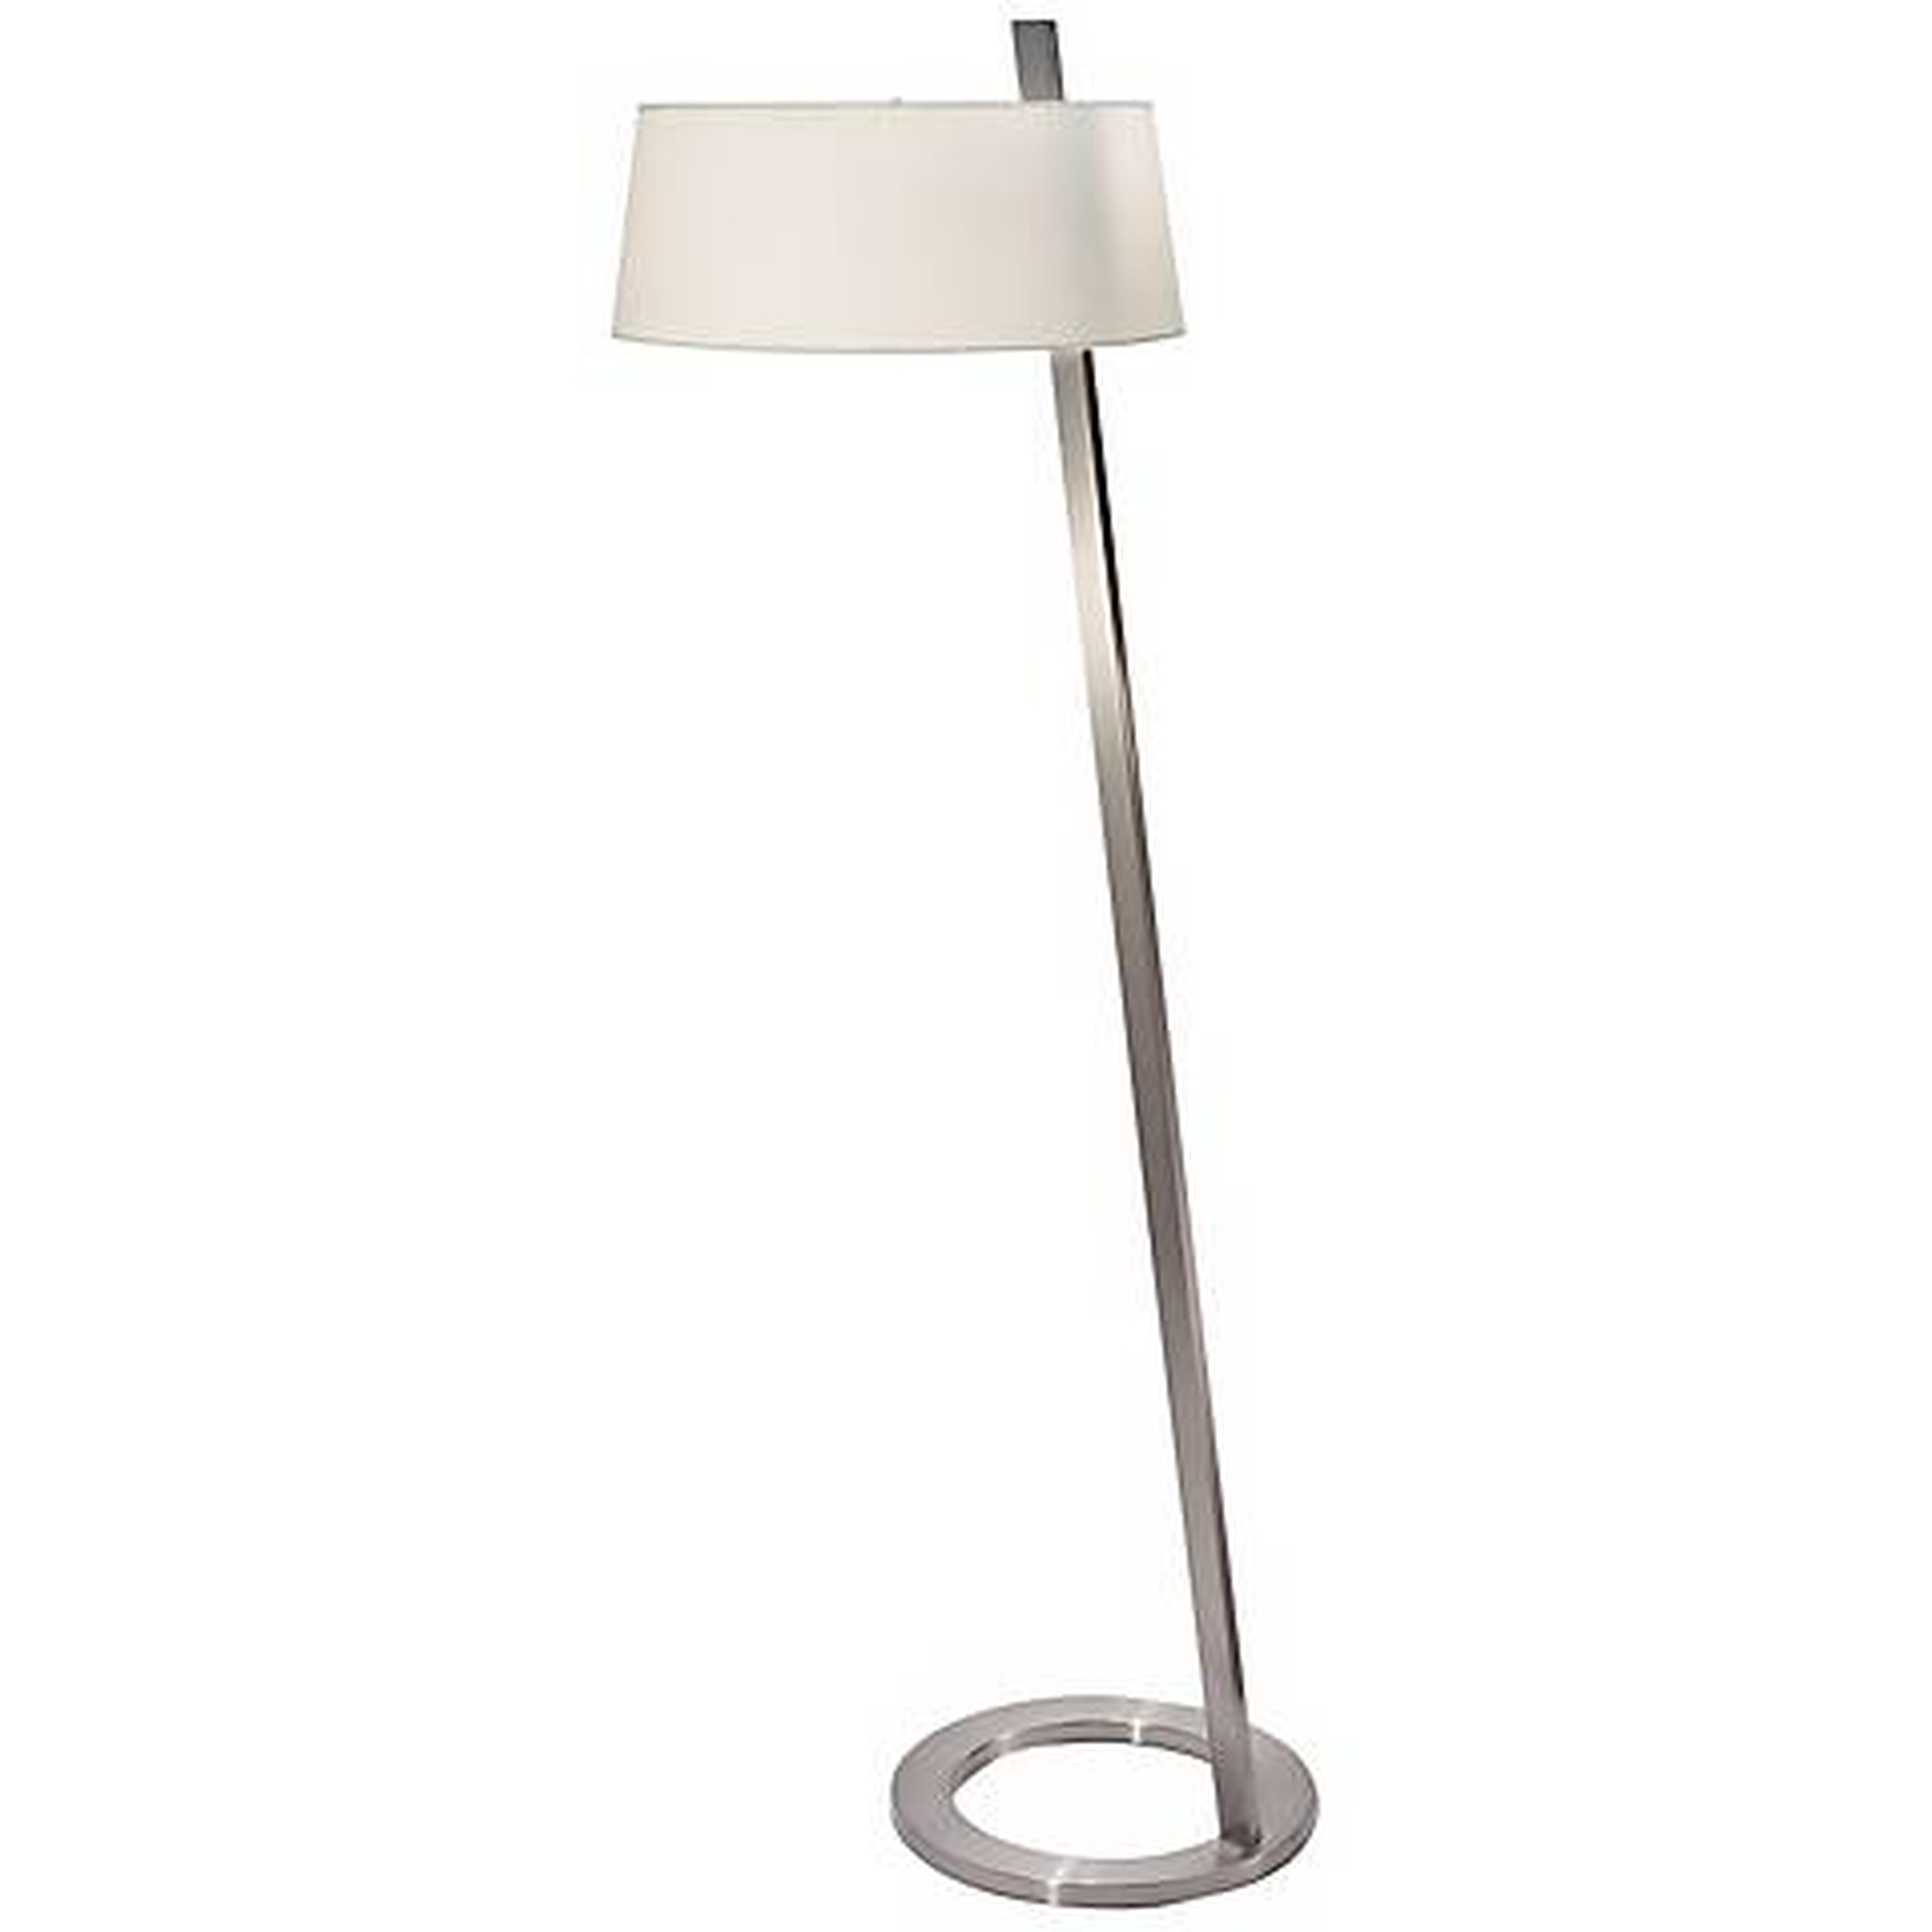 Sonneman Lina Satin Nickel Floor Lamp white - Lamps Plus